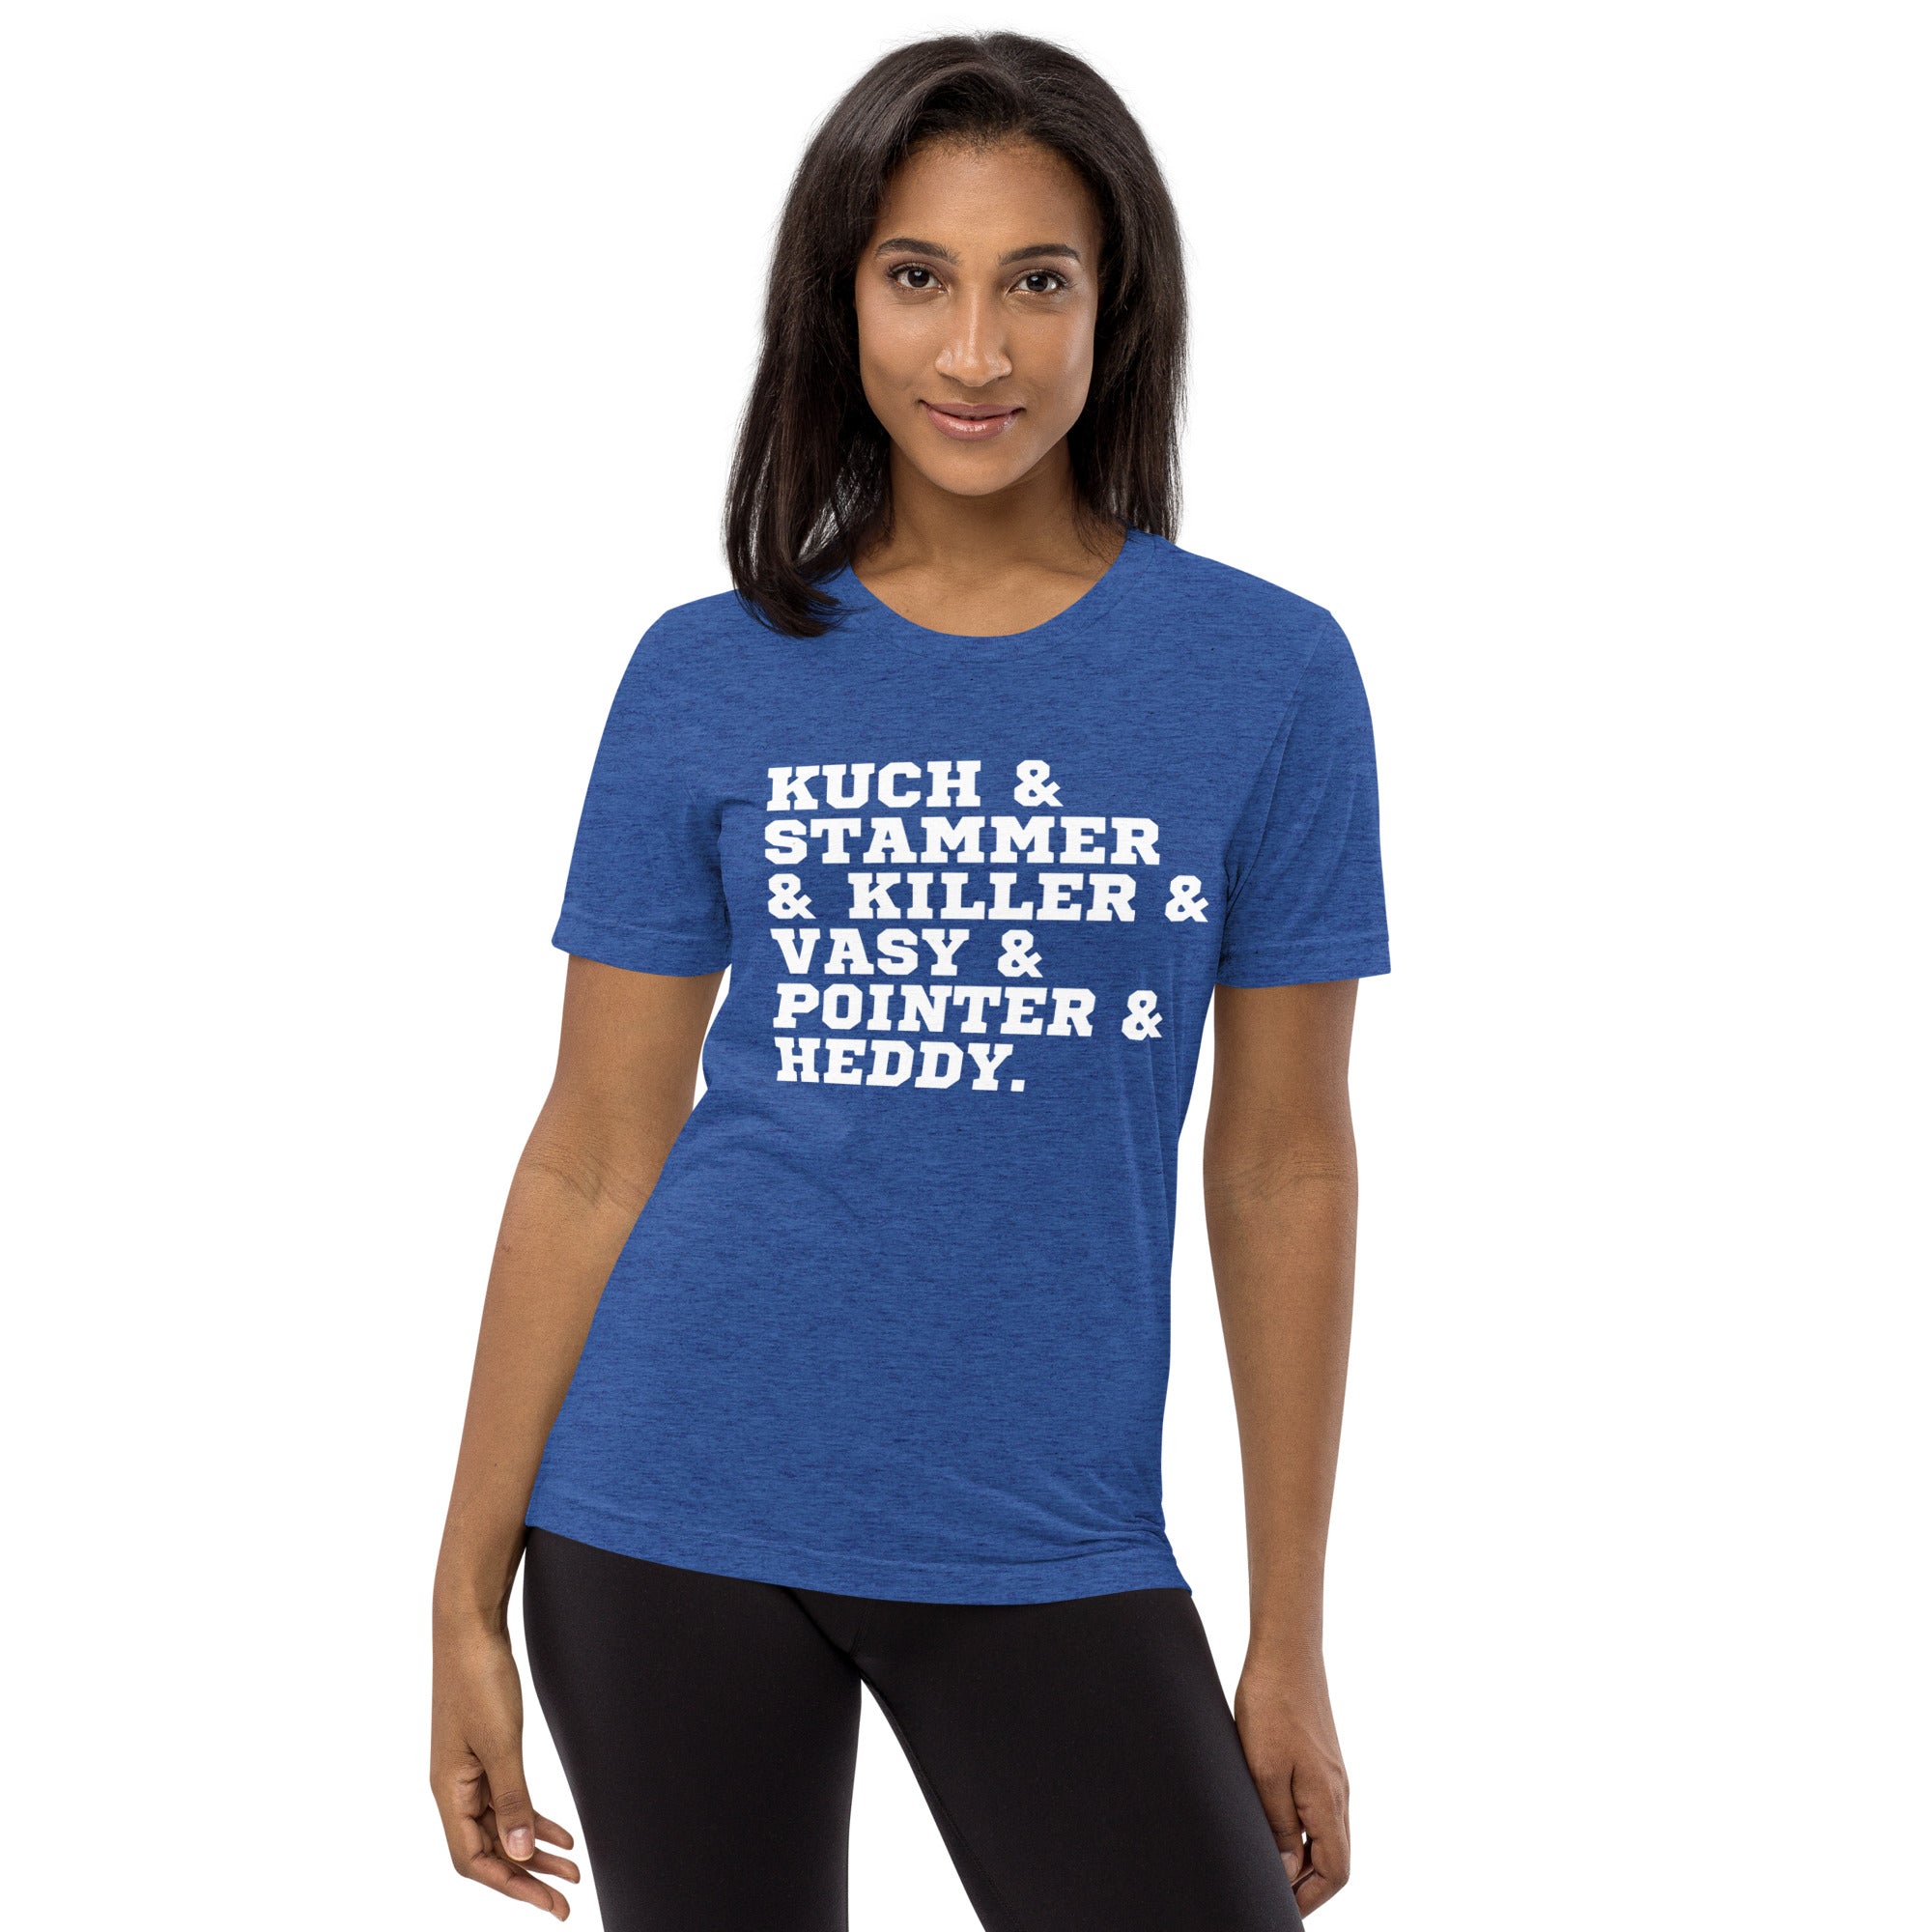 Bucs Bolts Rays Loyal To Tampa Shirt | Essential T-Shirt